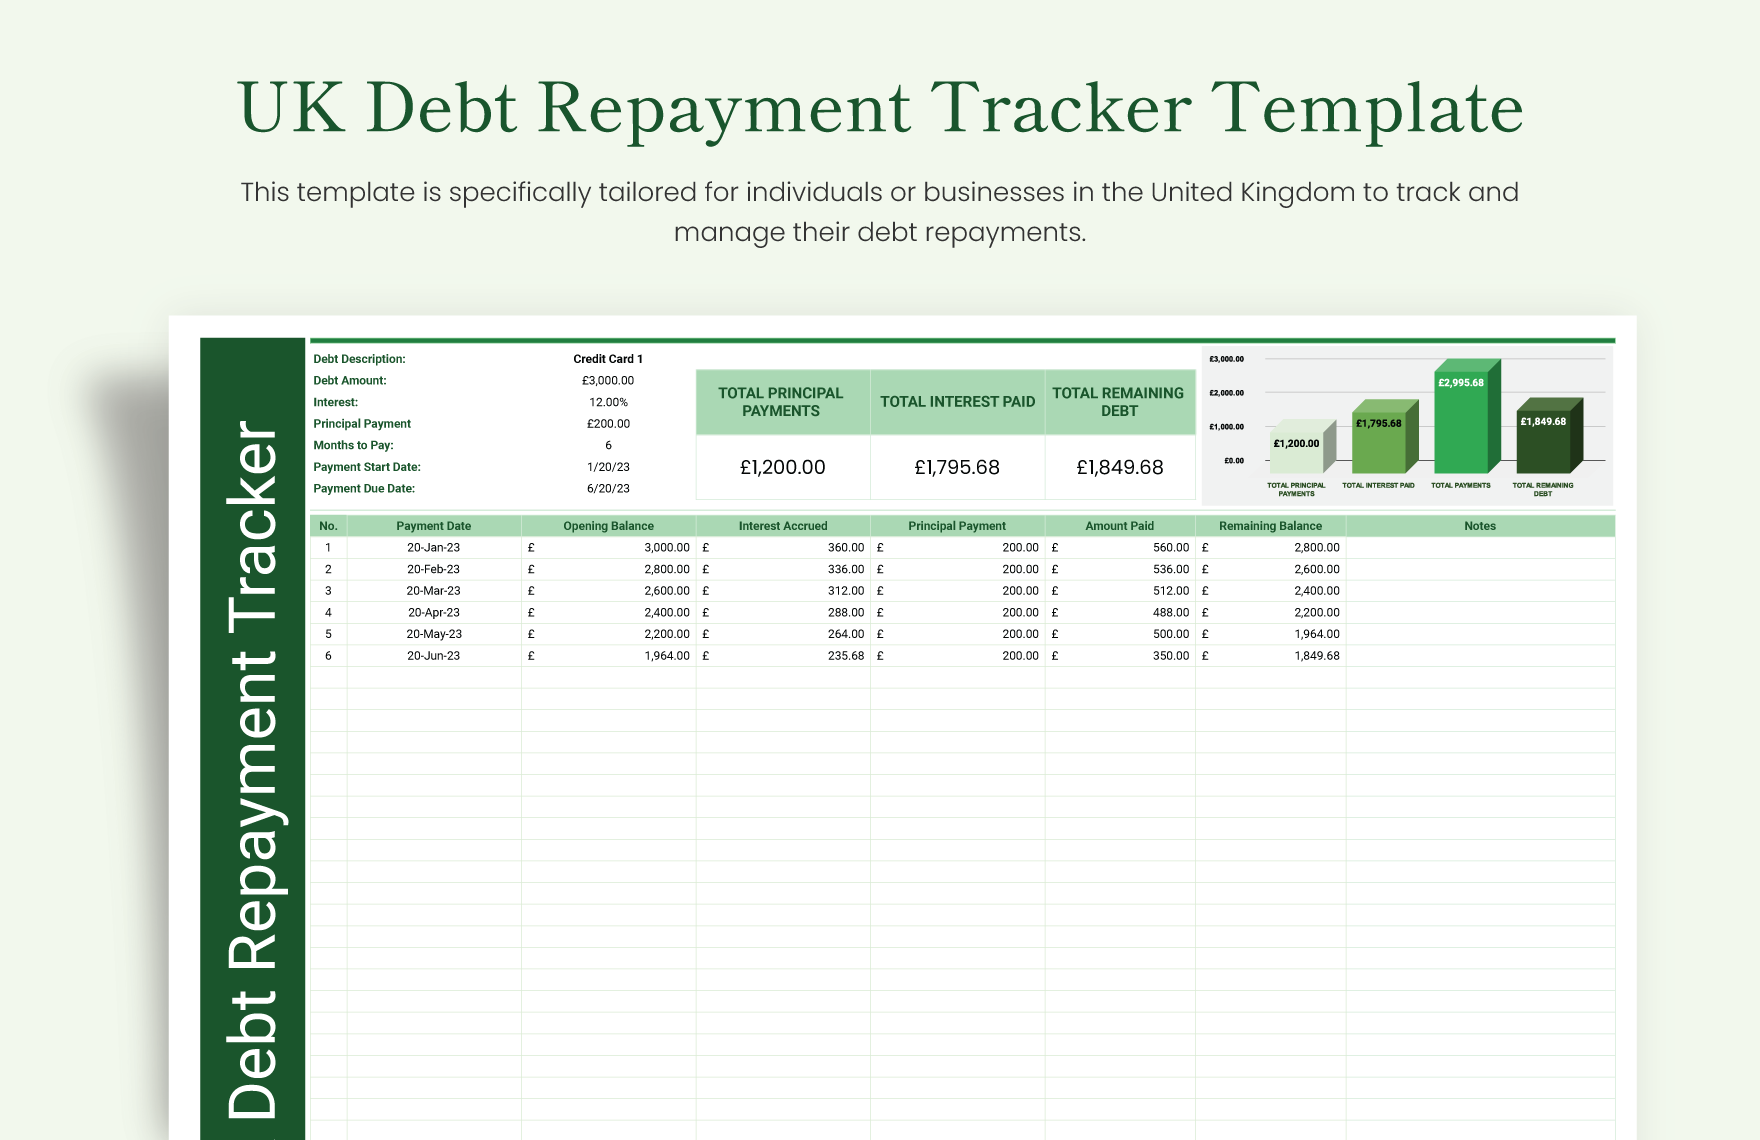 UK Debt Repayment Tracker Template